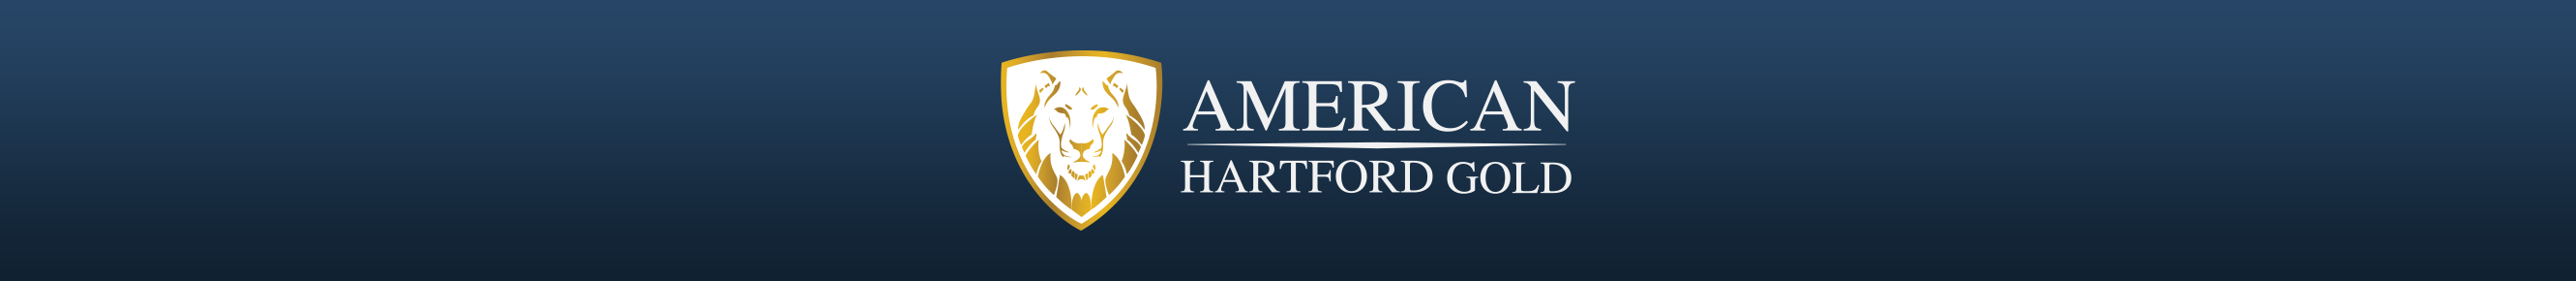 American Hartford Gold 